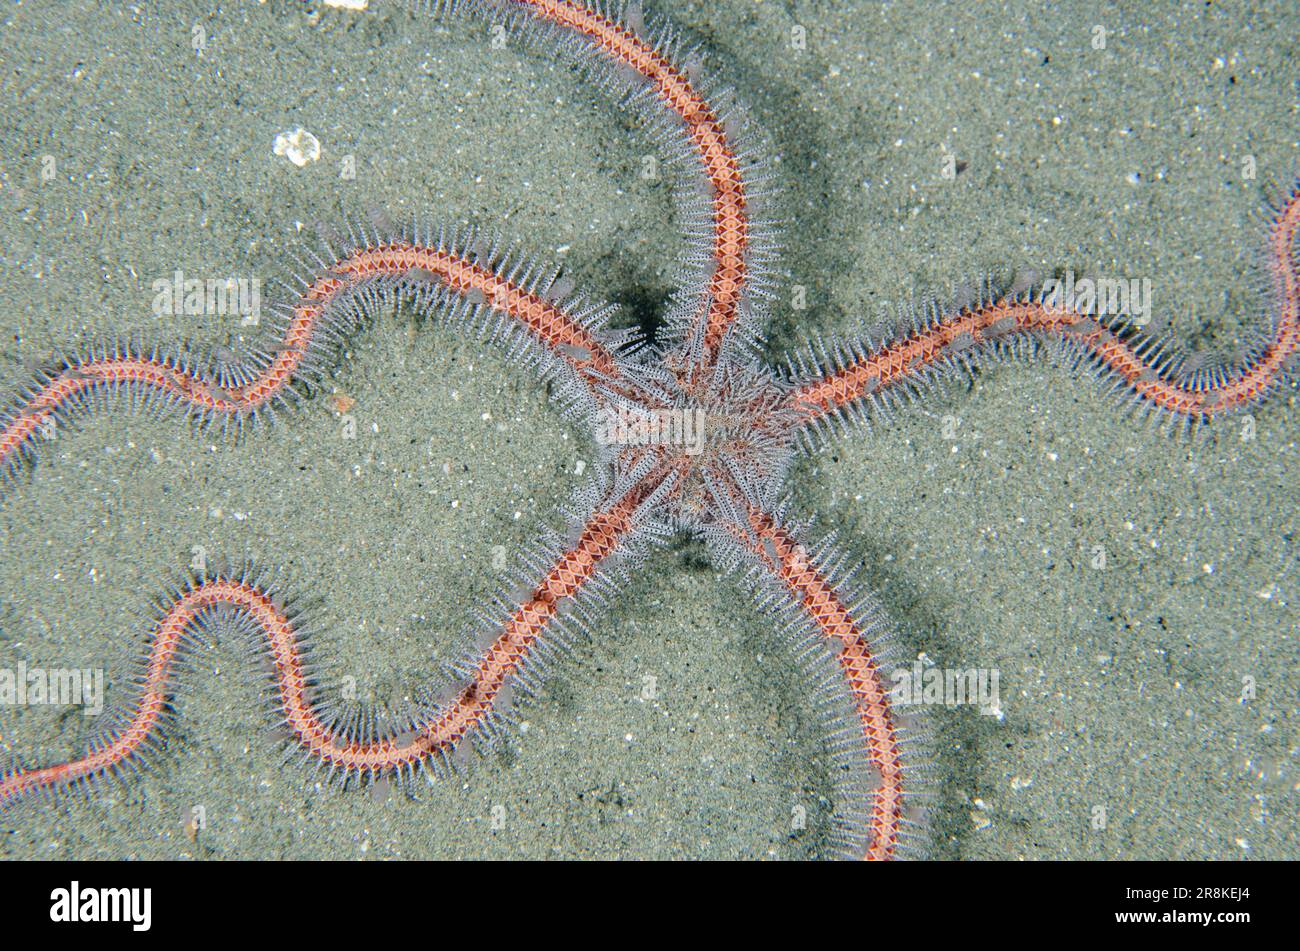 Brittle Star, Ophiothrix sp, on sand, night dive, Laha dive site, Ambon, Maluku, Indonesia, Banda Sea Stock Photo